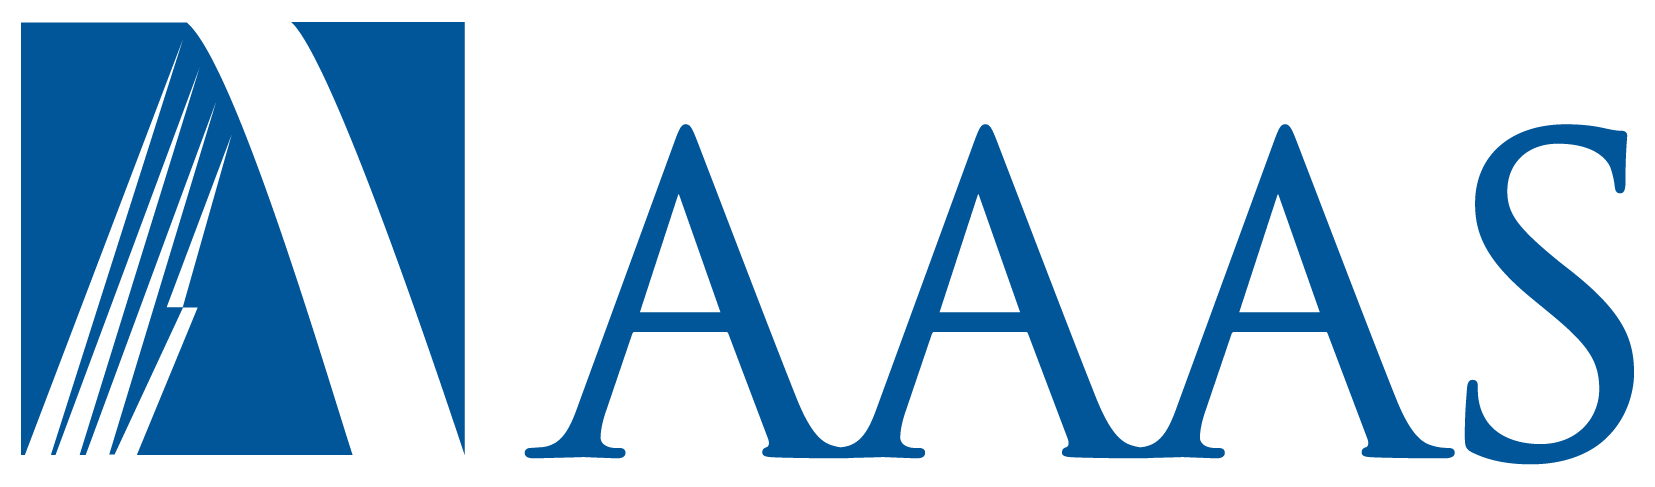 AAAS Logo_CMYK_BLUE.png